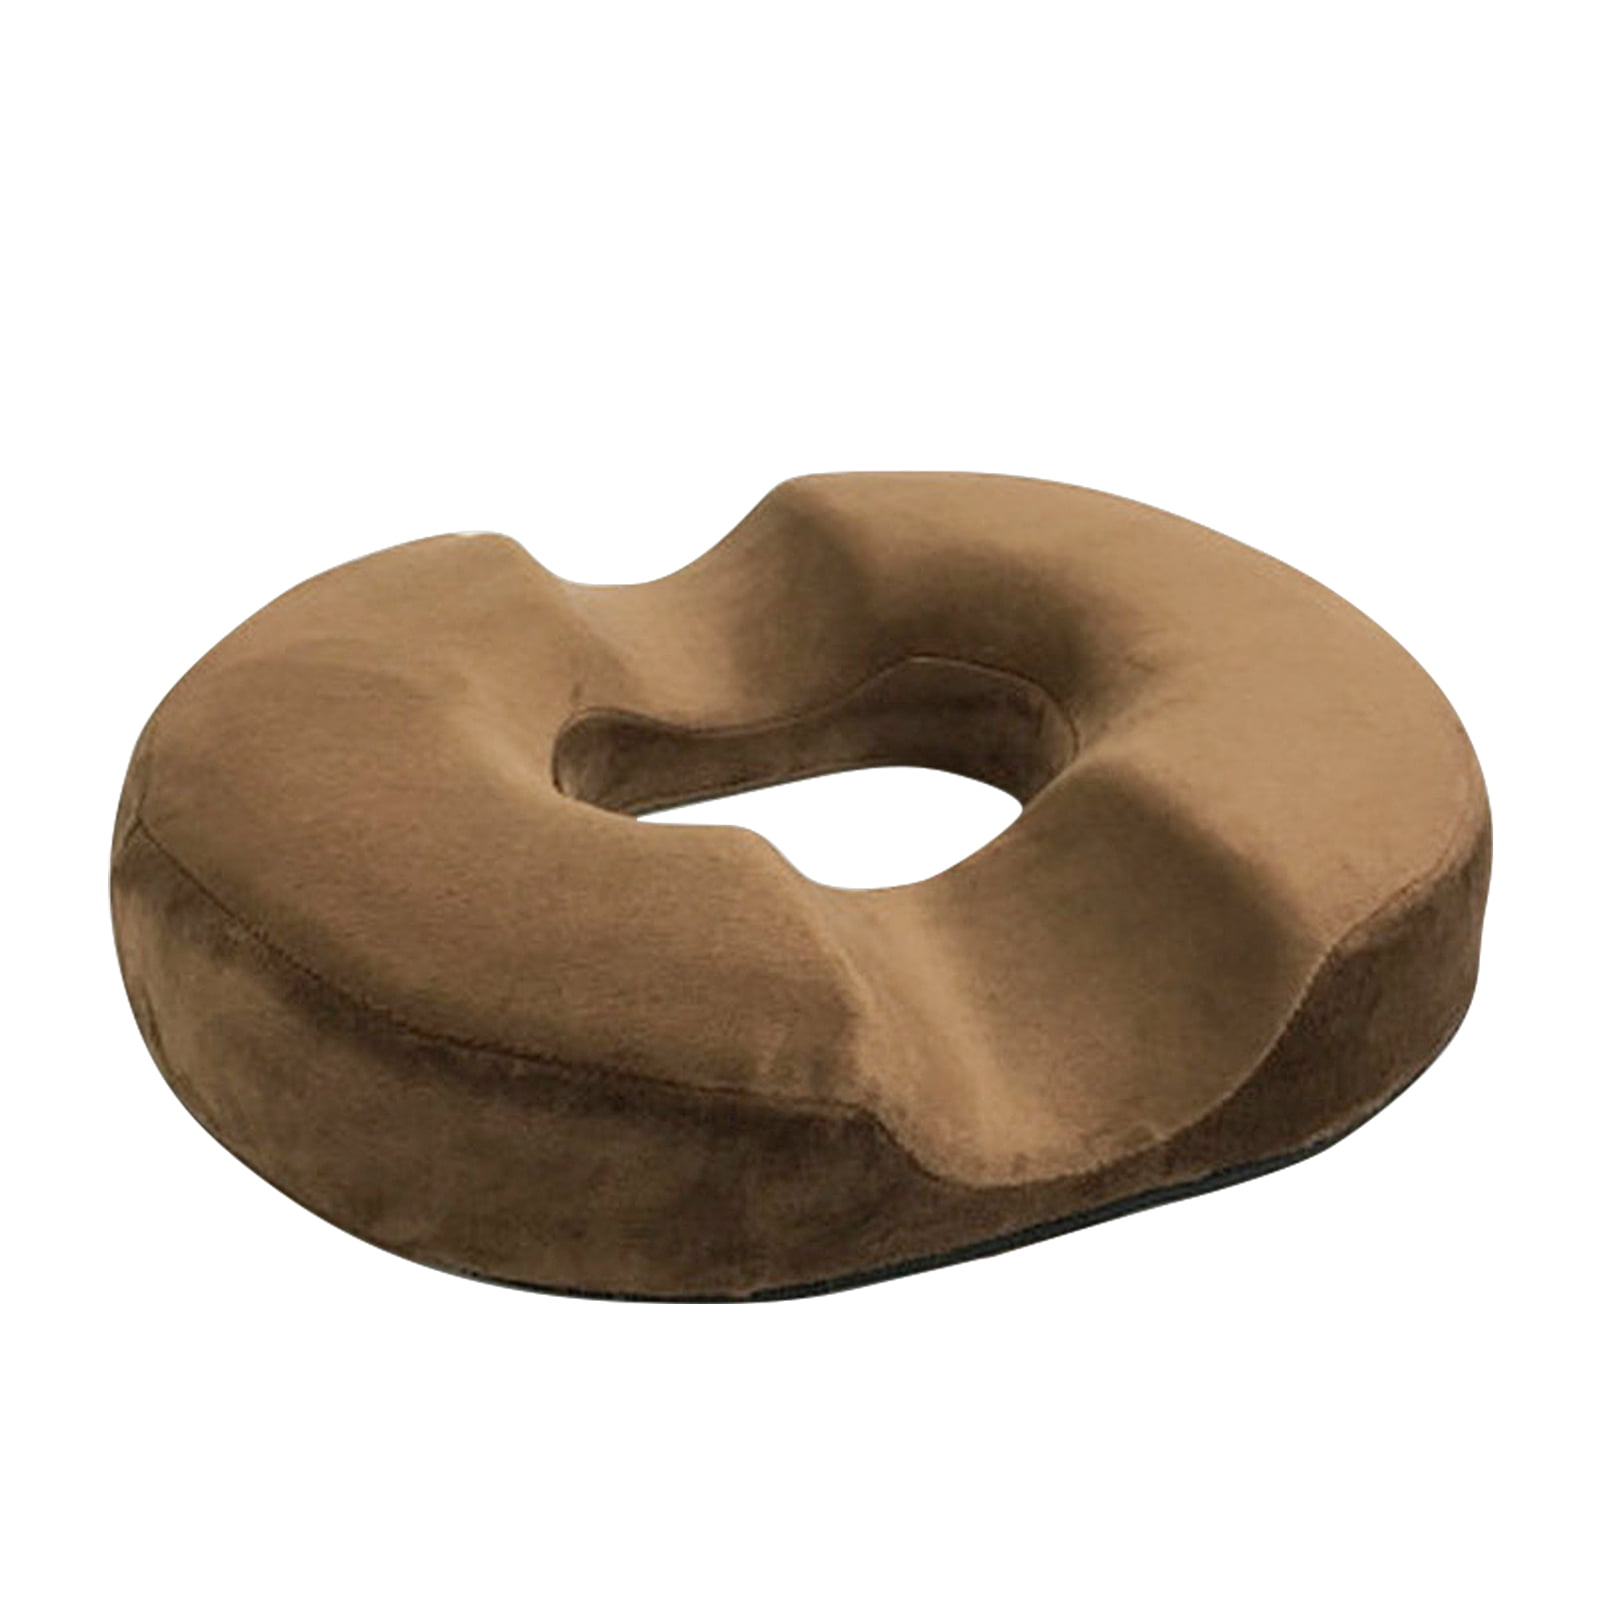 Lovote Donut Pillow Memory Foam Seat Cushion Hemorrhoid Tailbone Cushion  Pain Relief， Brown